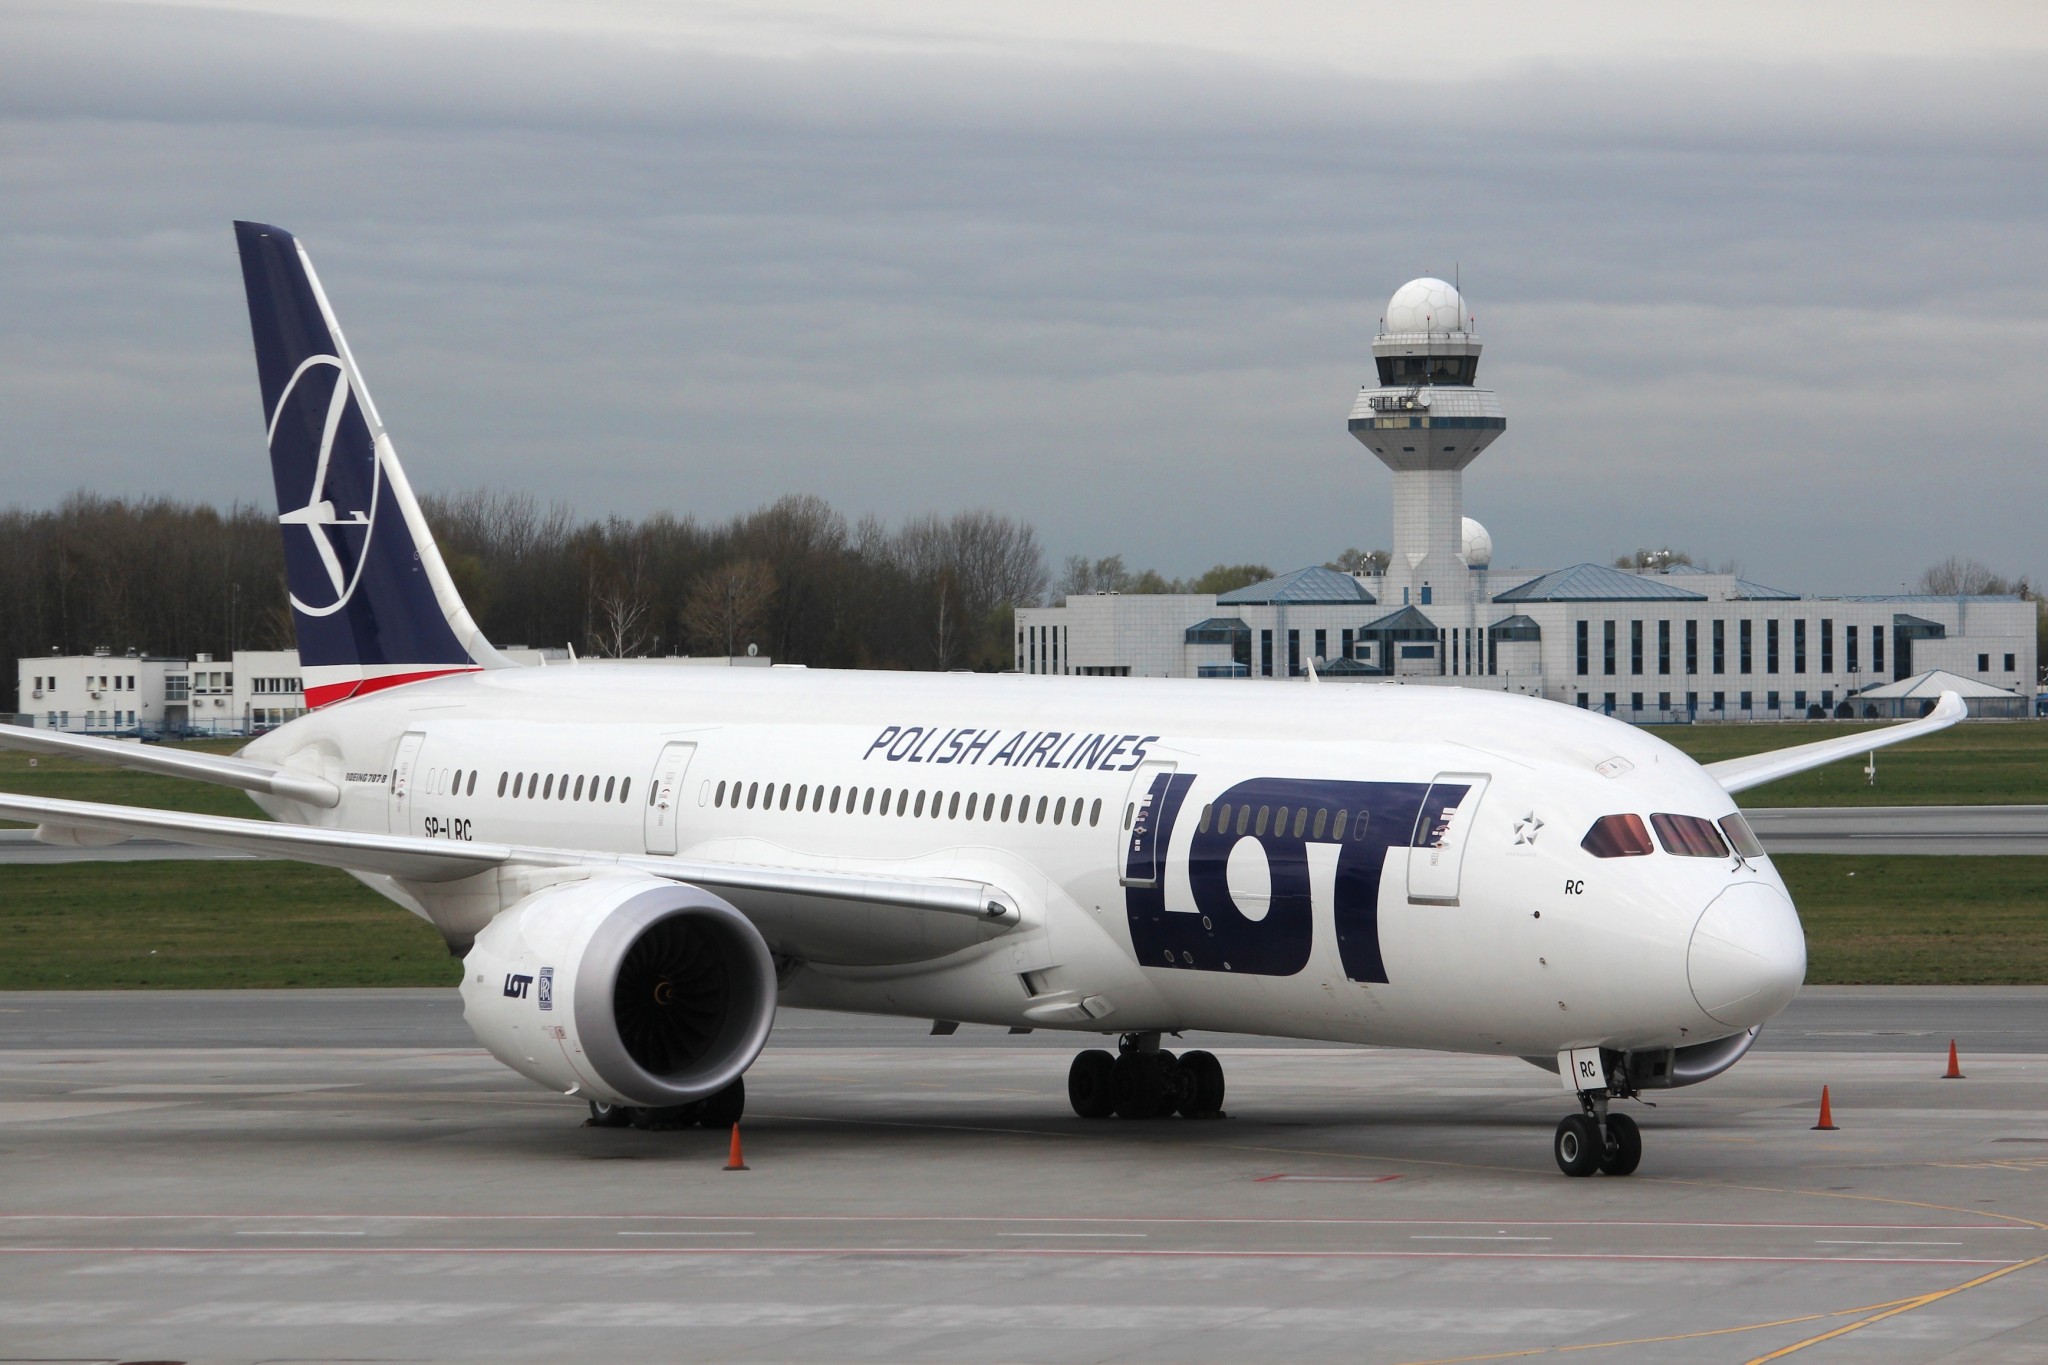 LOT launches flights to Billund